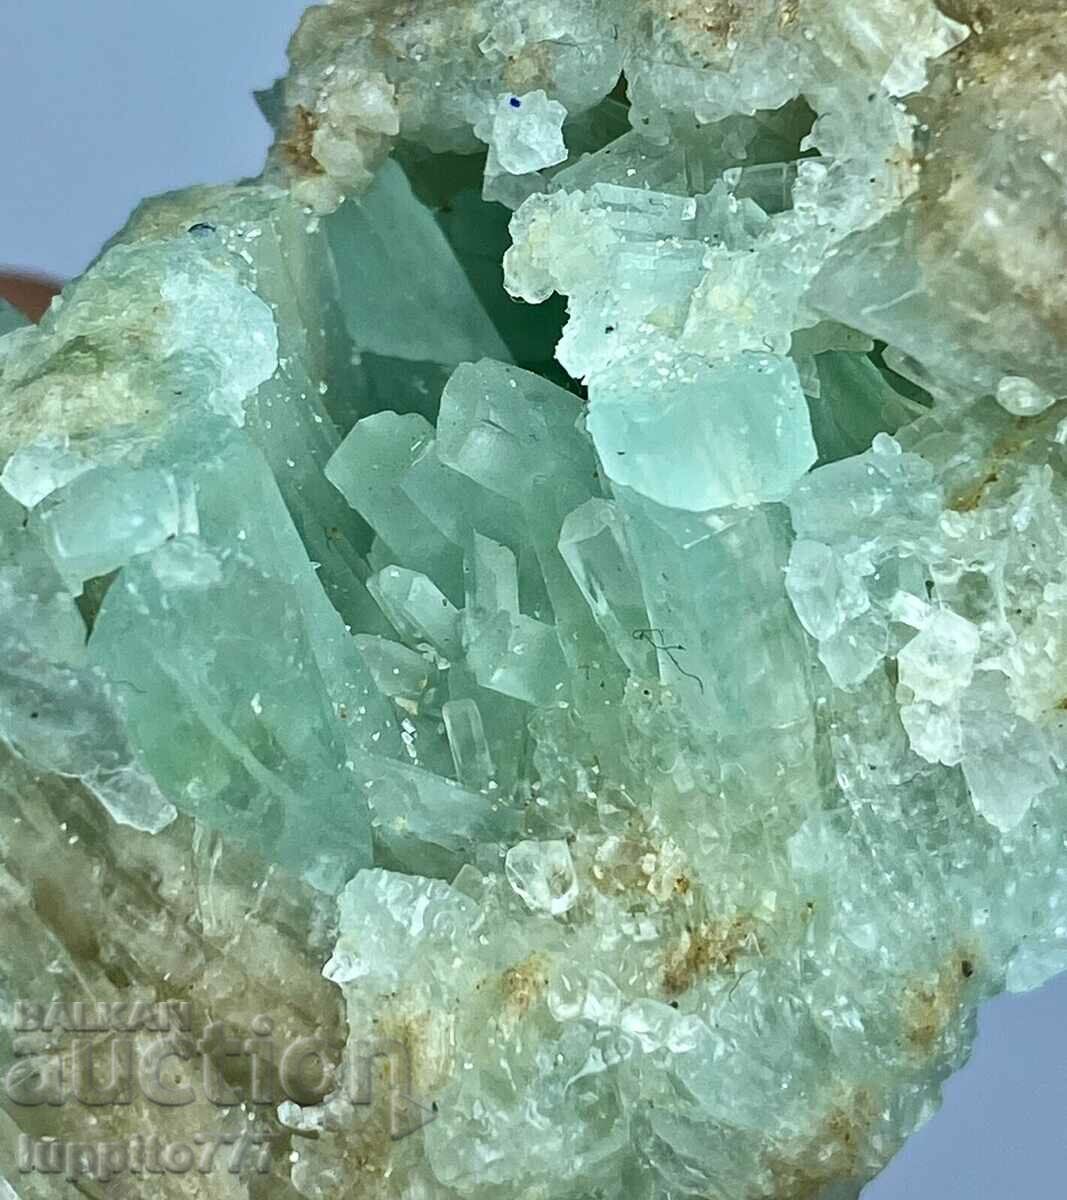 144 grams of natural aragonite smithsonite per matrix unique